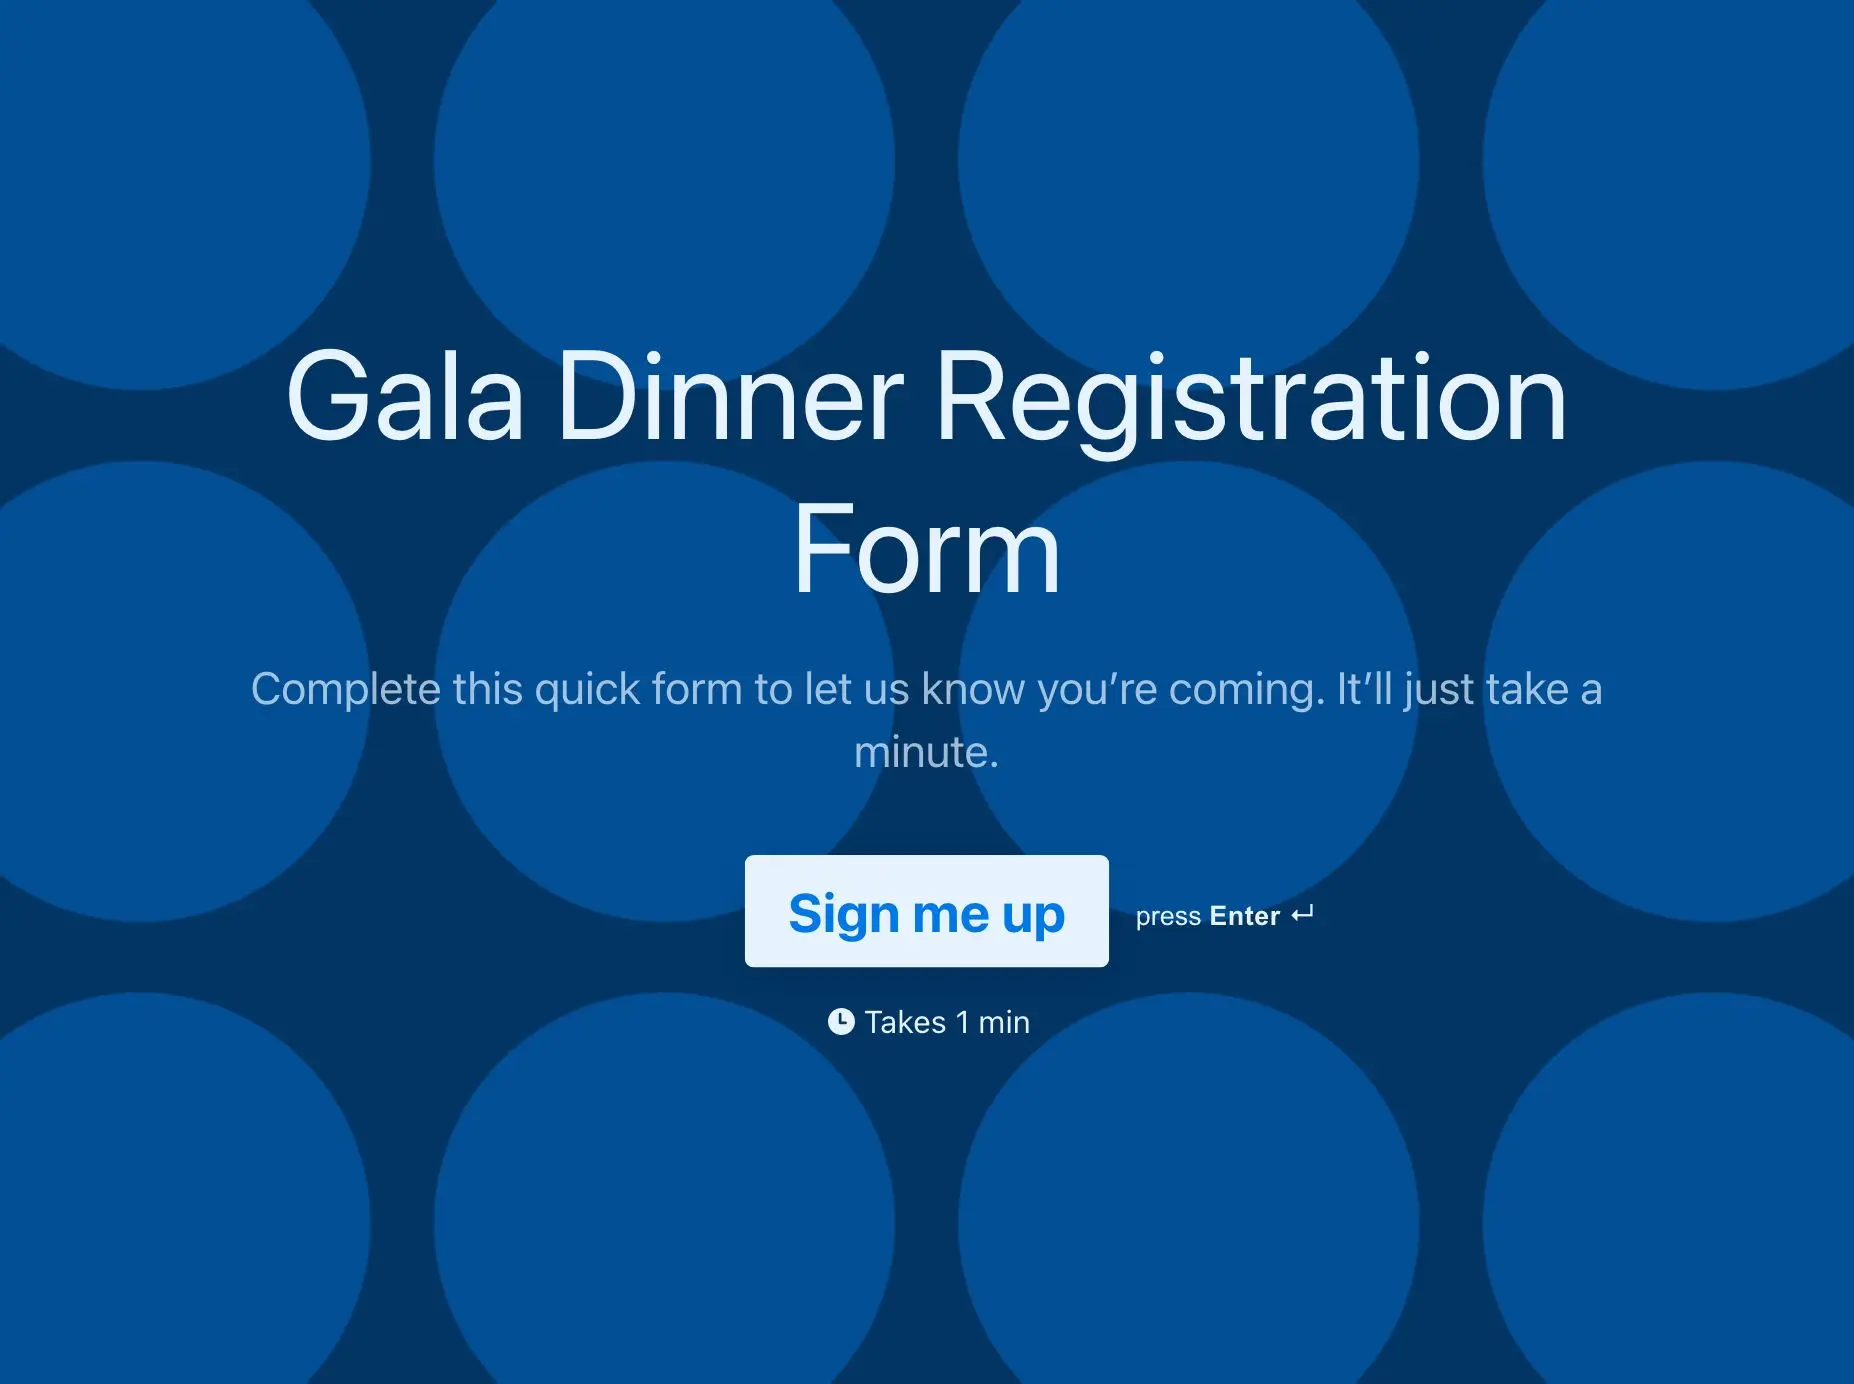 Gala Dinner Registration Form Template Hero